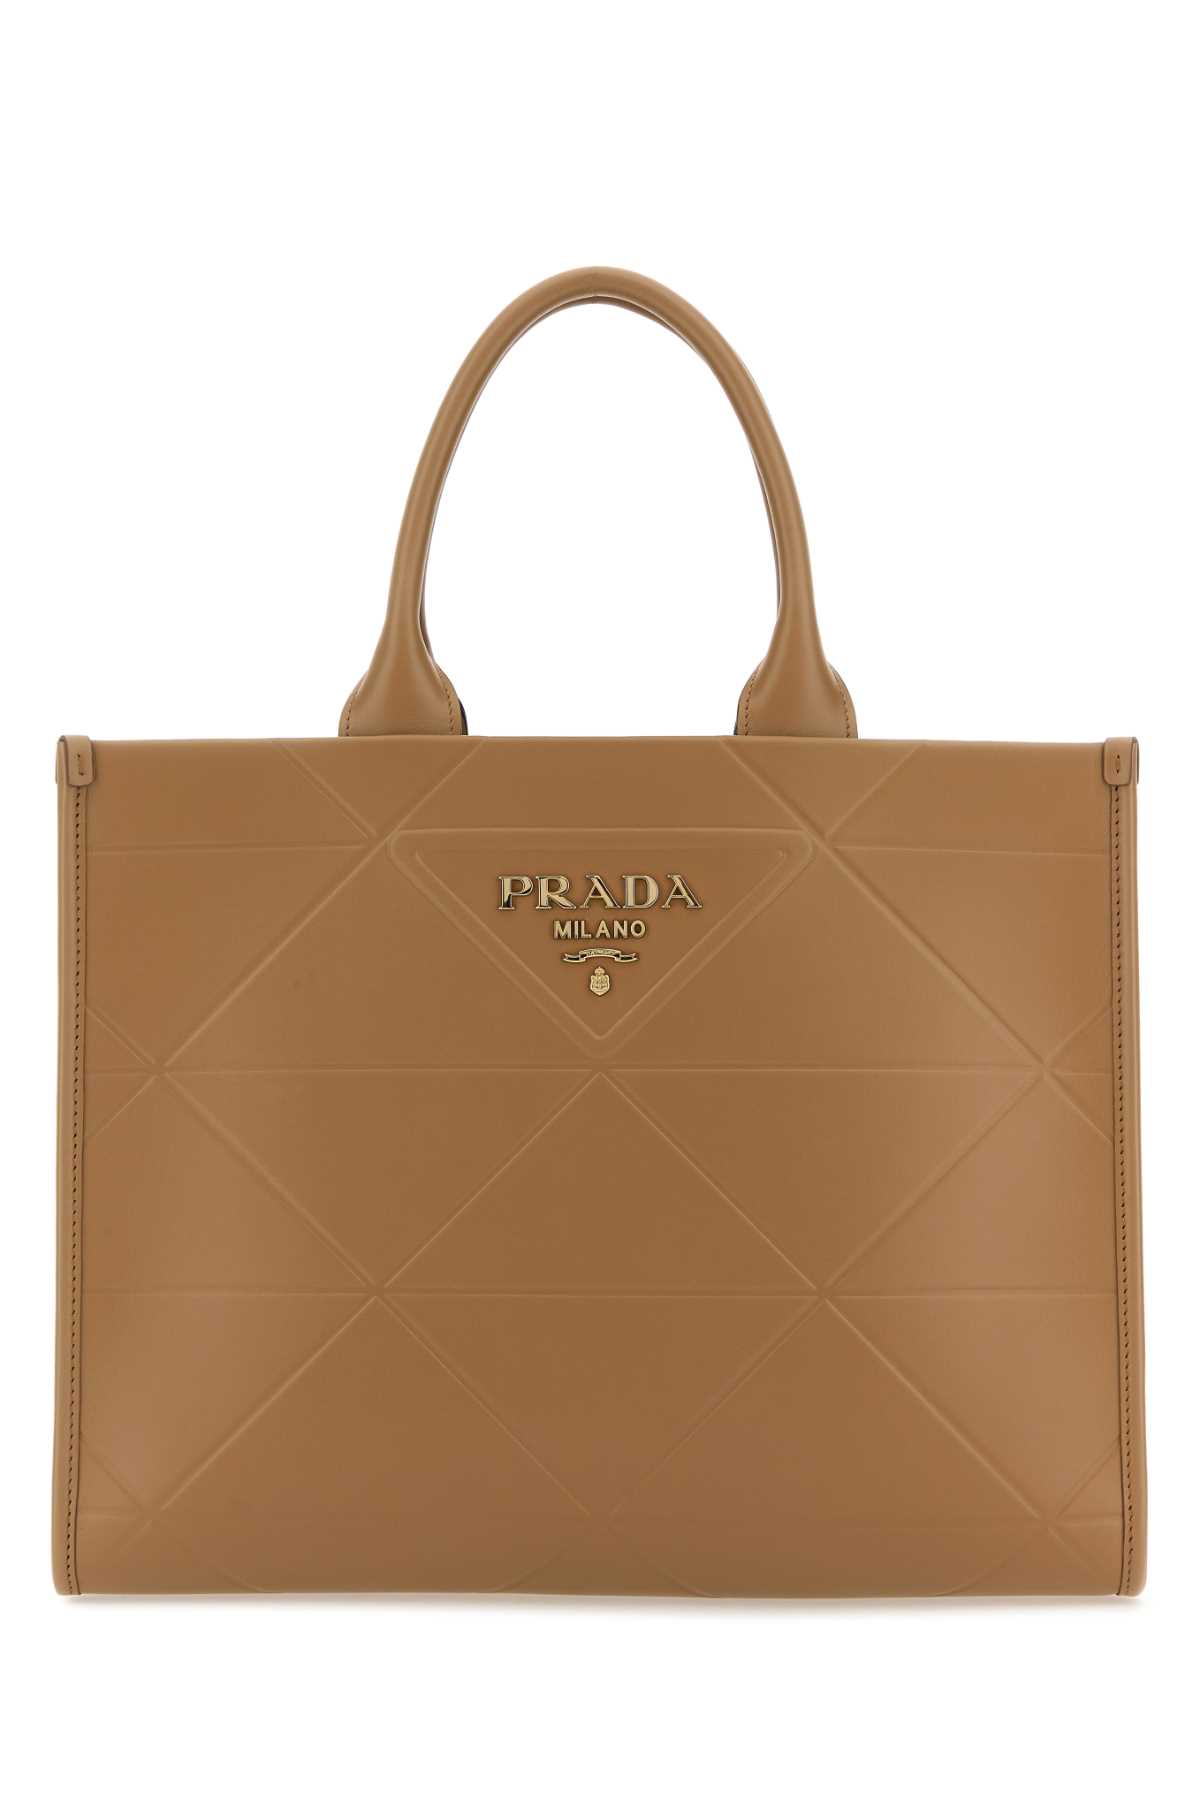 Prada Camel Leather Shopping Bag